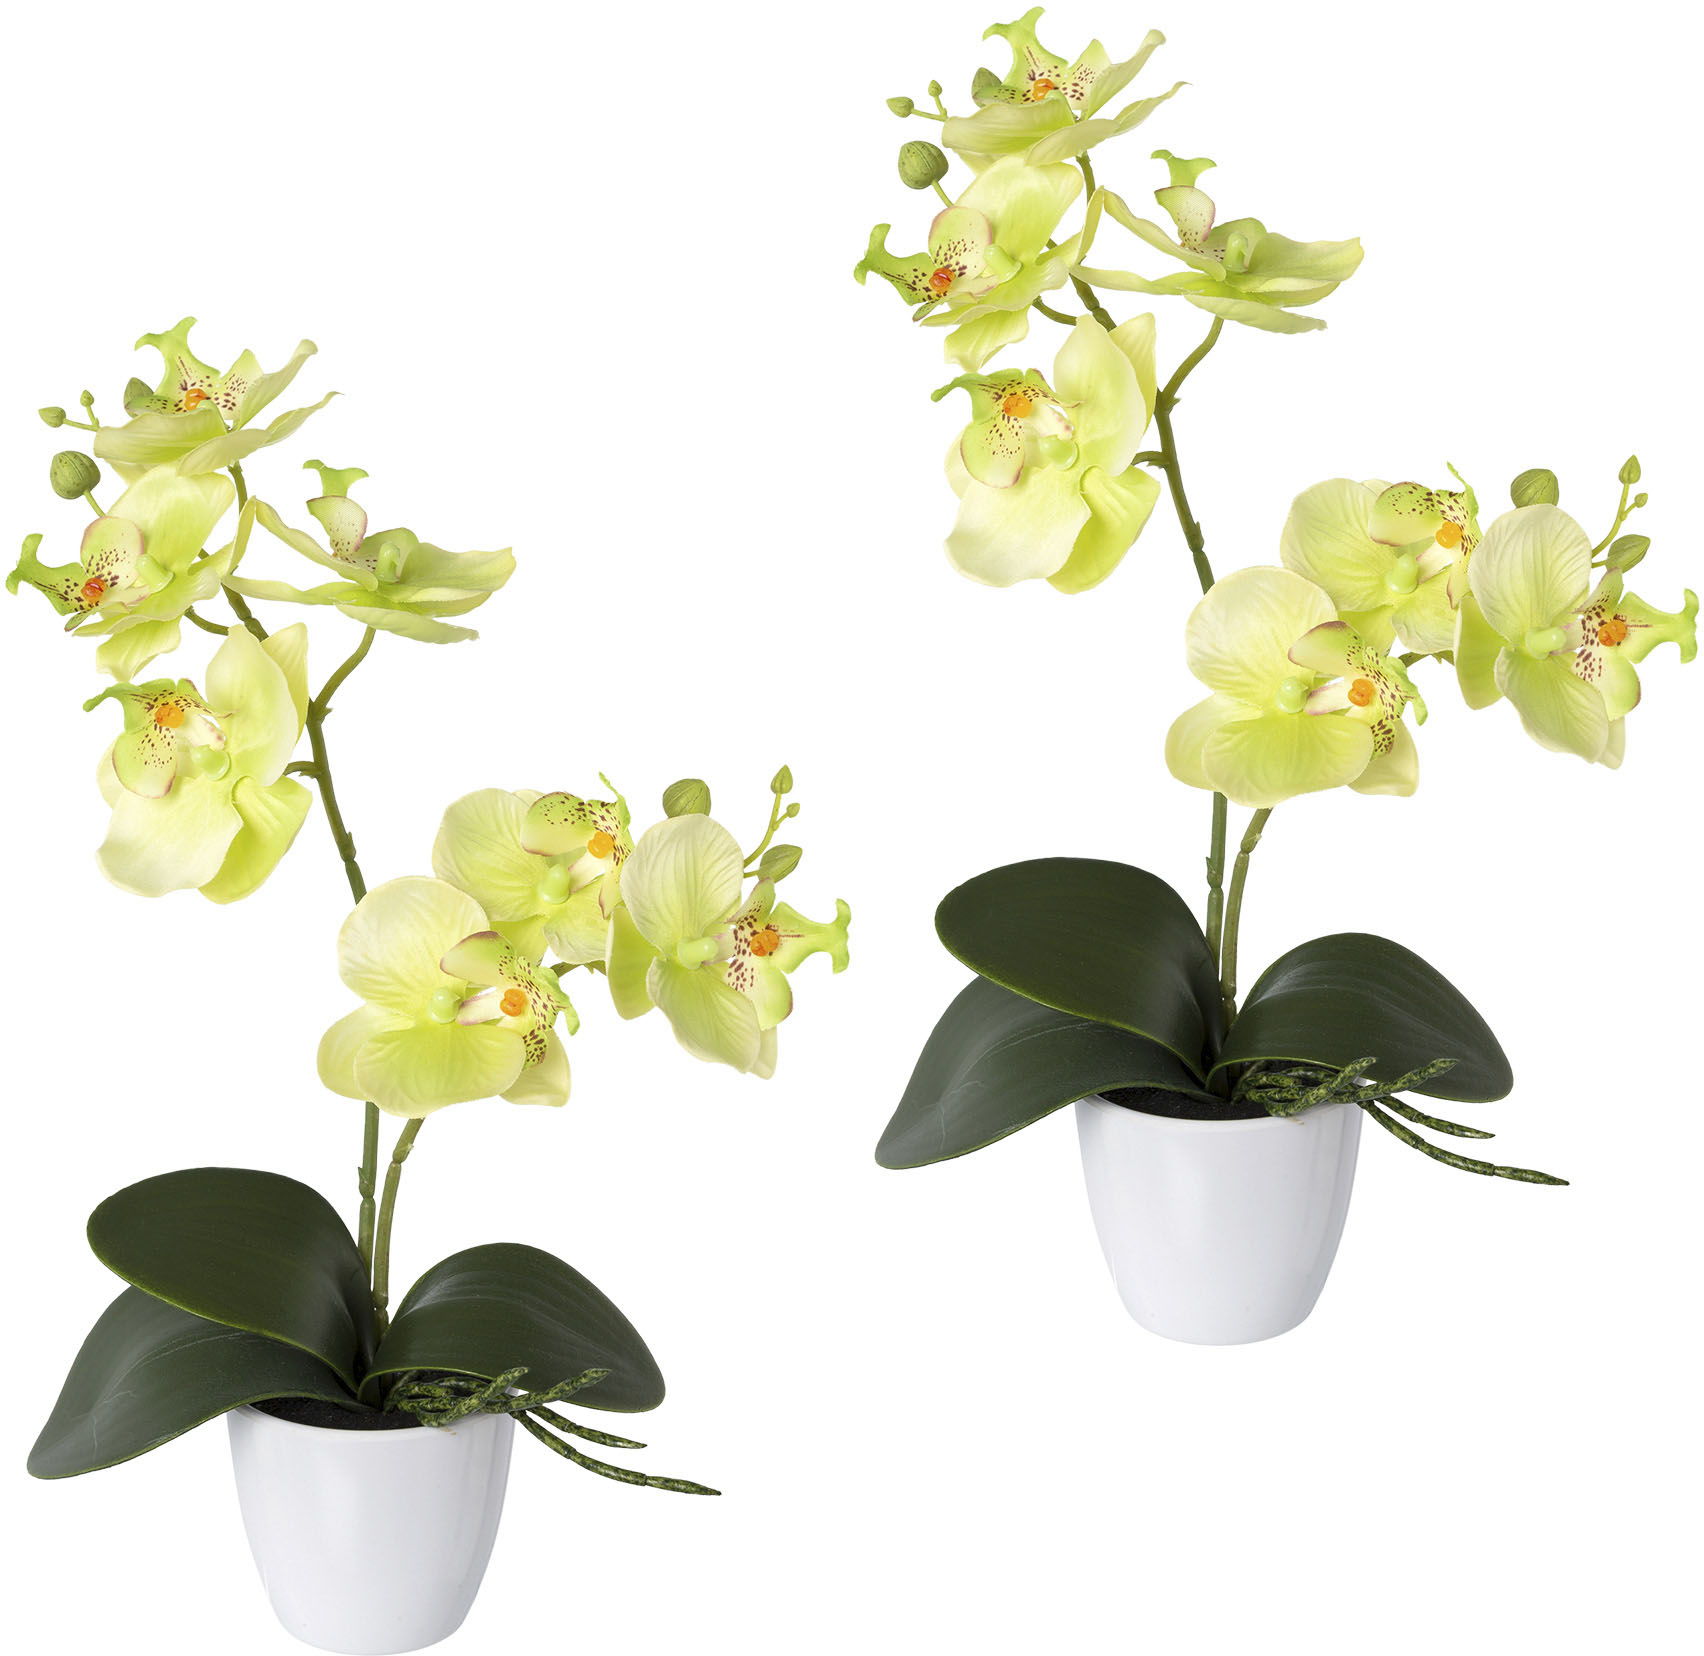 Creativ green Kunstorchidee »Phalaenopsis«, 2er Set, in Kunststoffschale  bequem bestellen